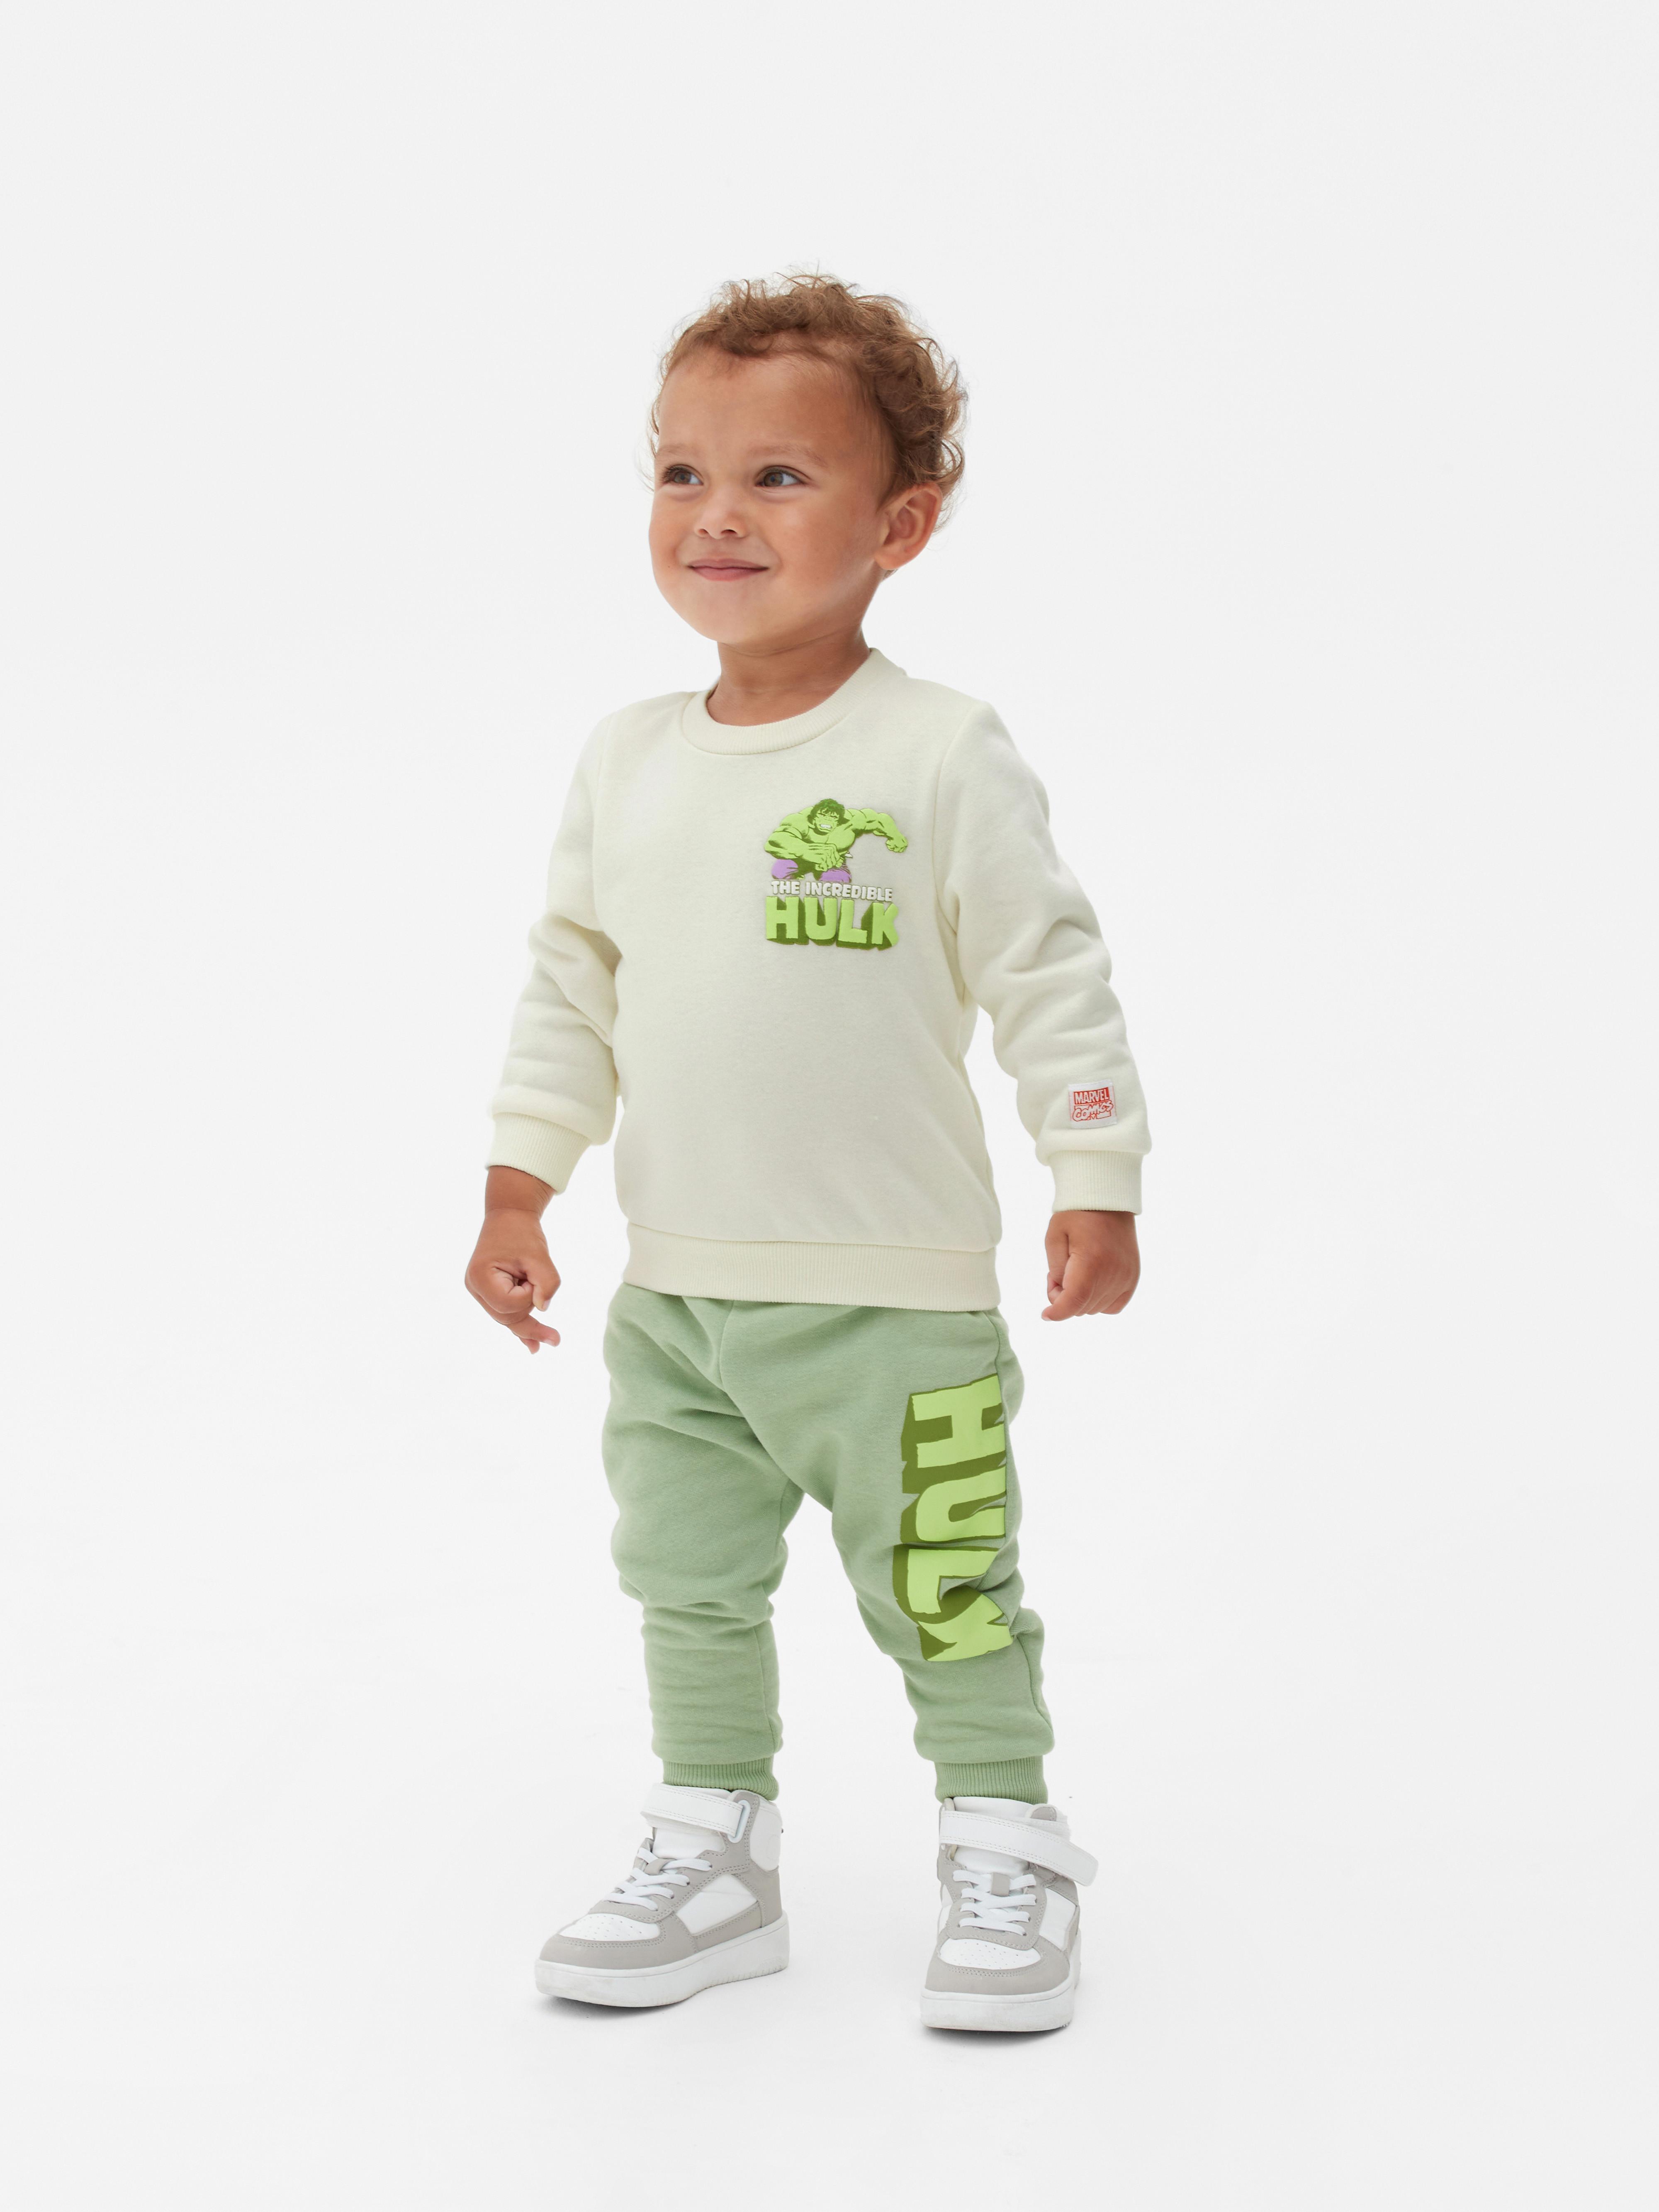 KIDS FASHION Baby packs White 9-12M discount 81% Primark Set 